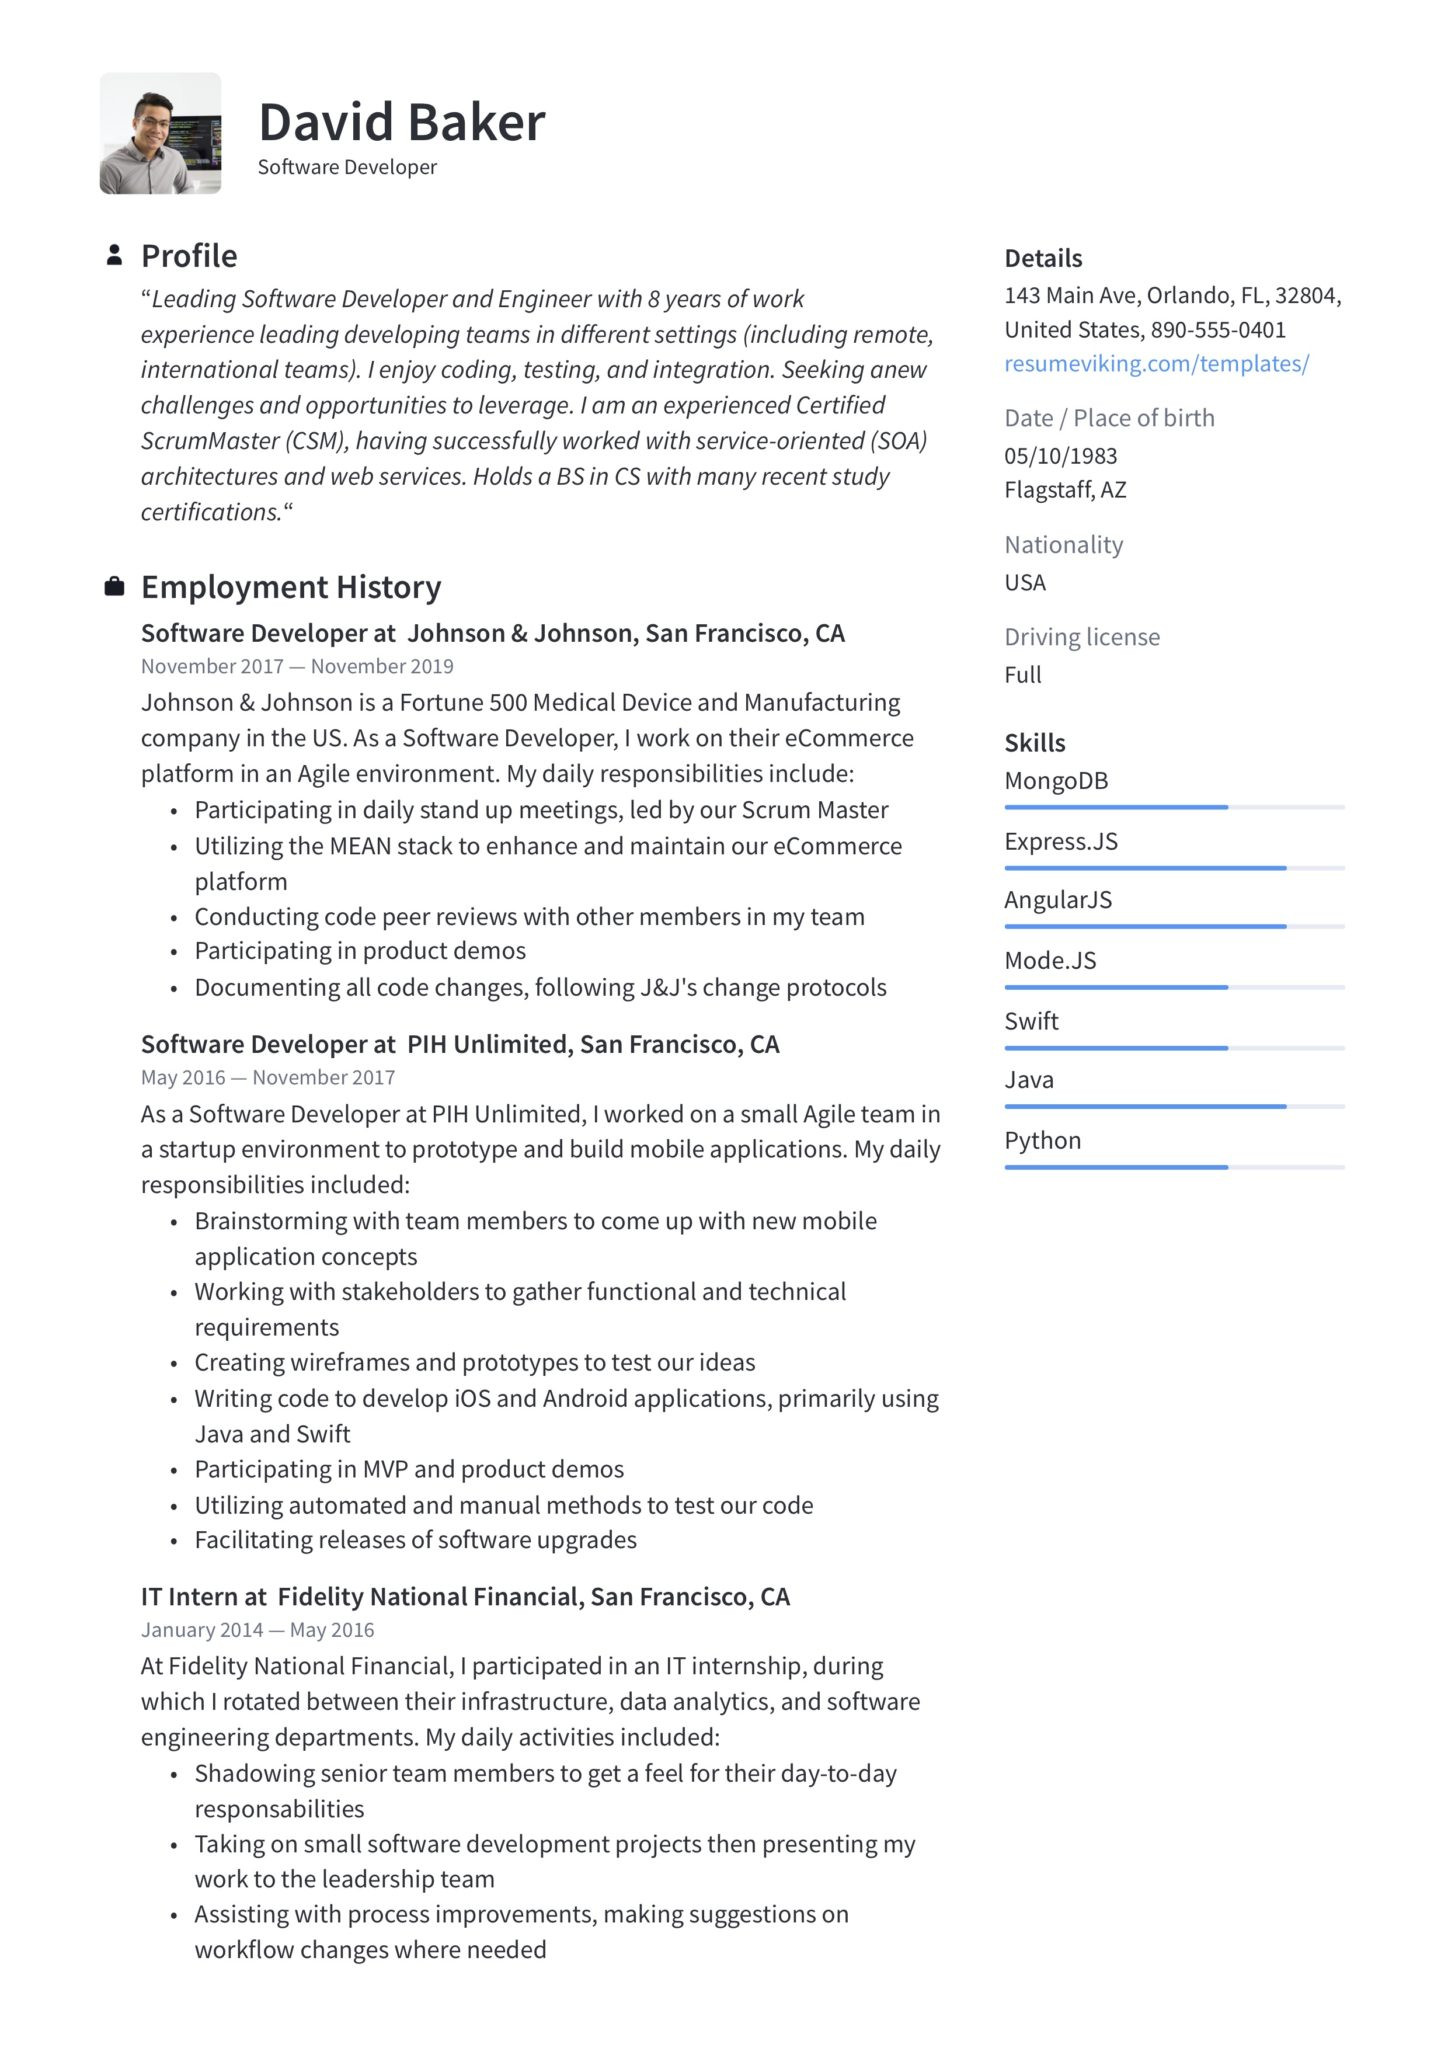 Sample Resume for software Engineer Fresher Pdf Guide: software Developer Resume  19 Examples Word & Pdf 2020